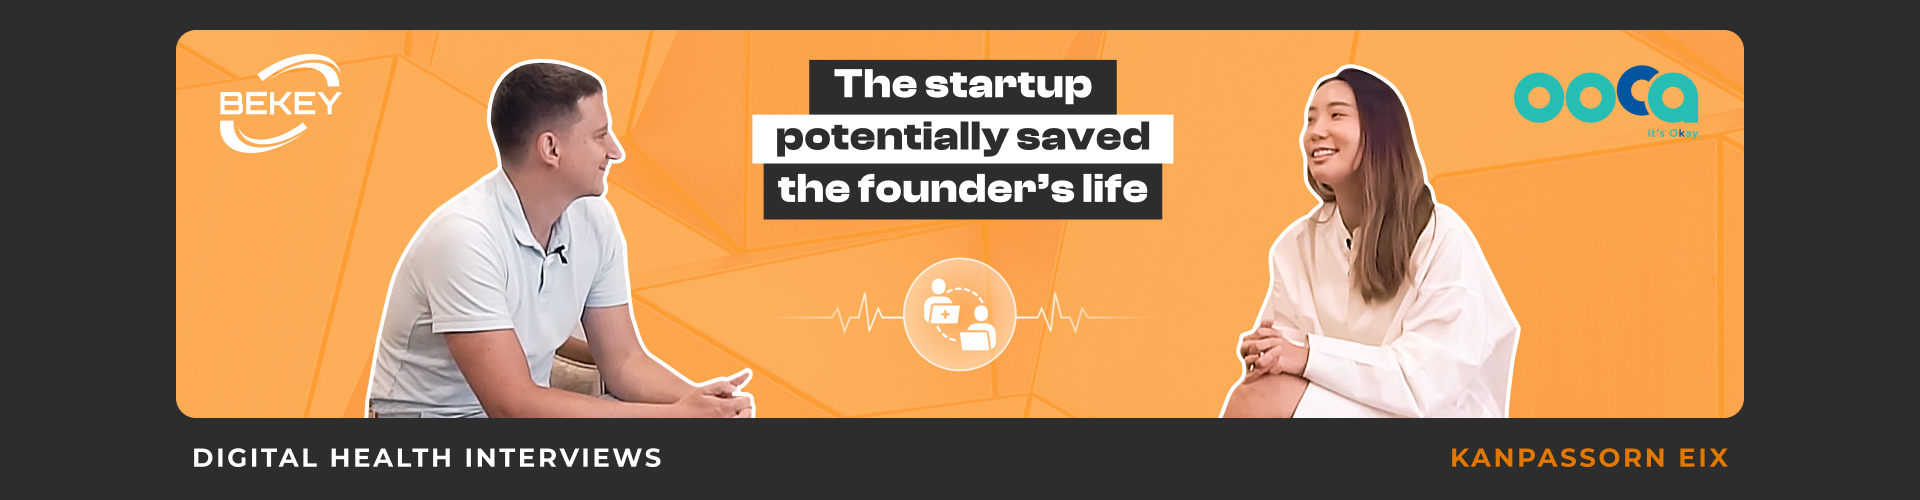 The Startup Saved the Founder’s Life. Digital Health Interviews: Kanpassorn Eix - image